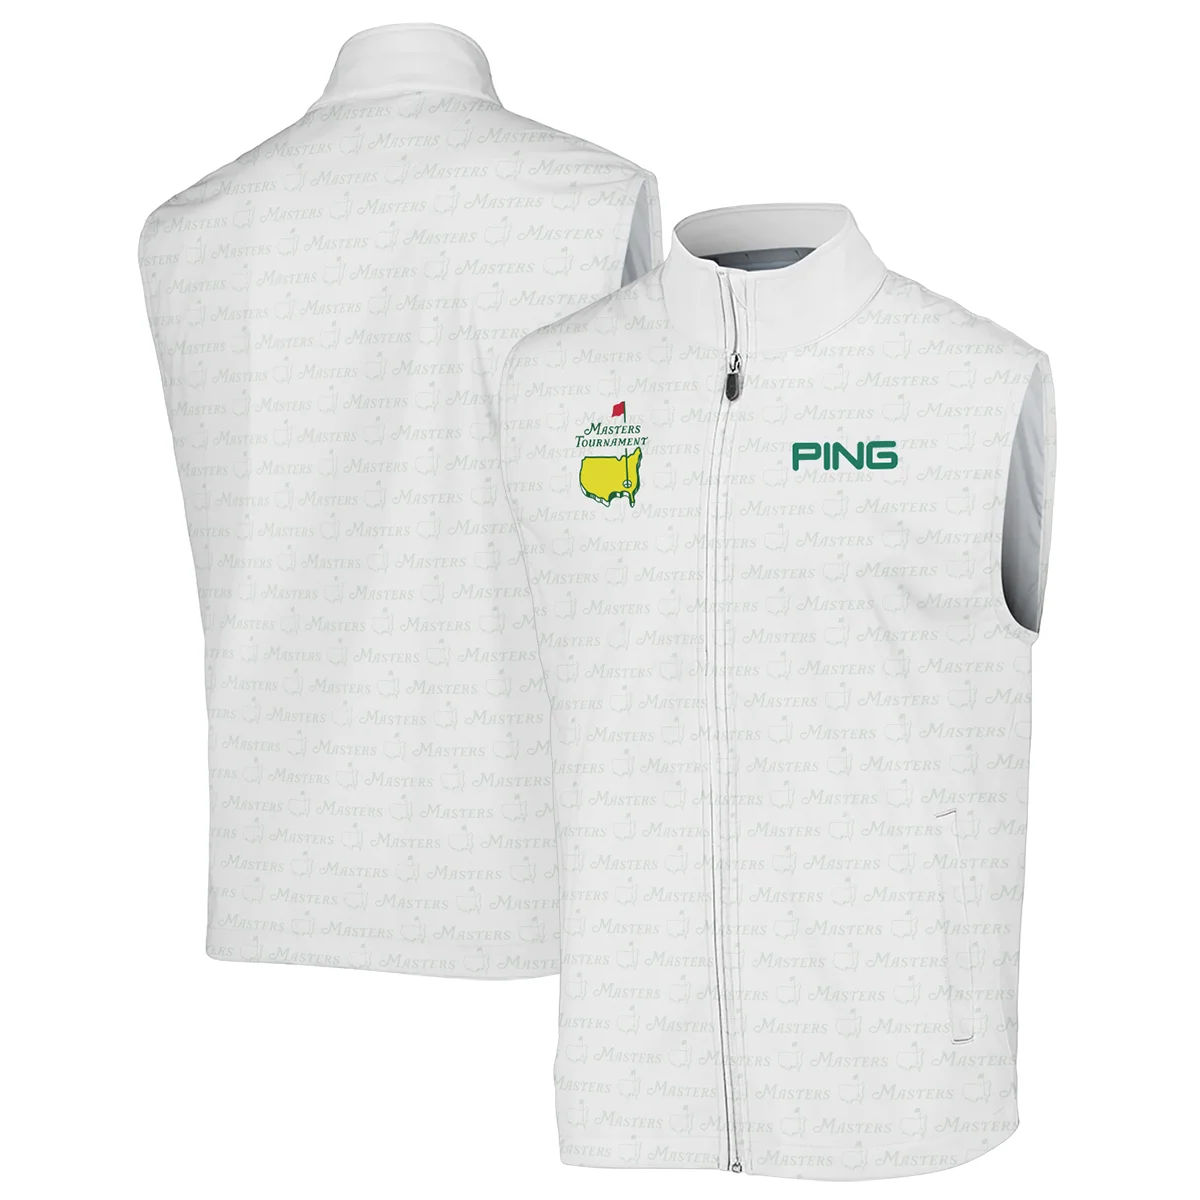 Pattern Masters Tournament Ping Sleeveless Jacket White Green Sport Love Clothing Sleeveless Jacket